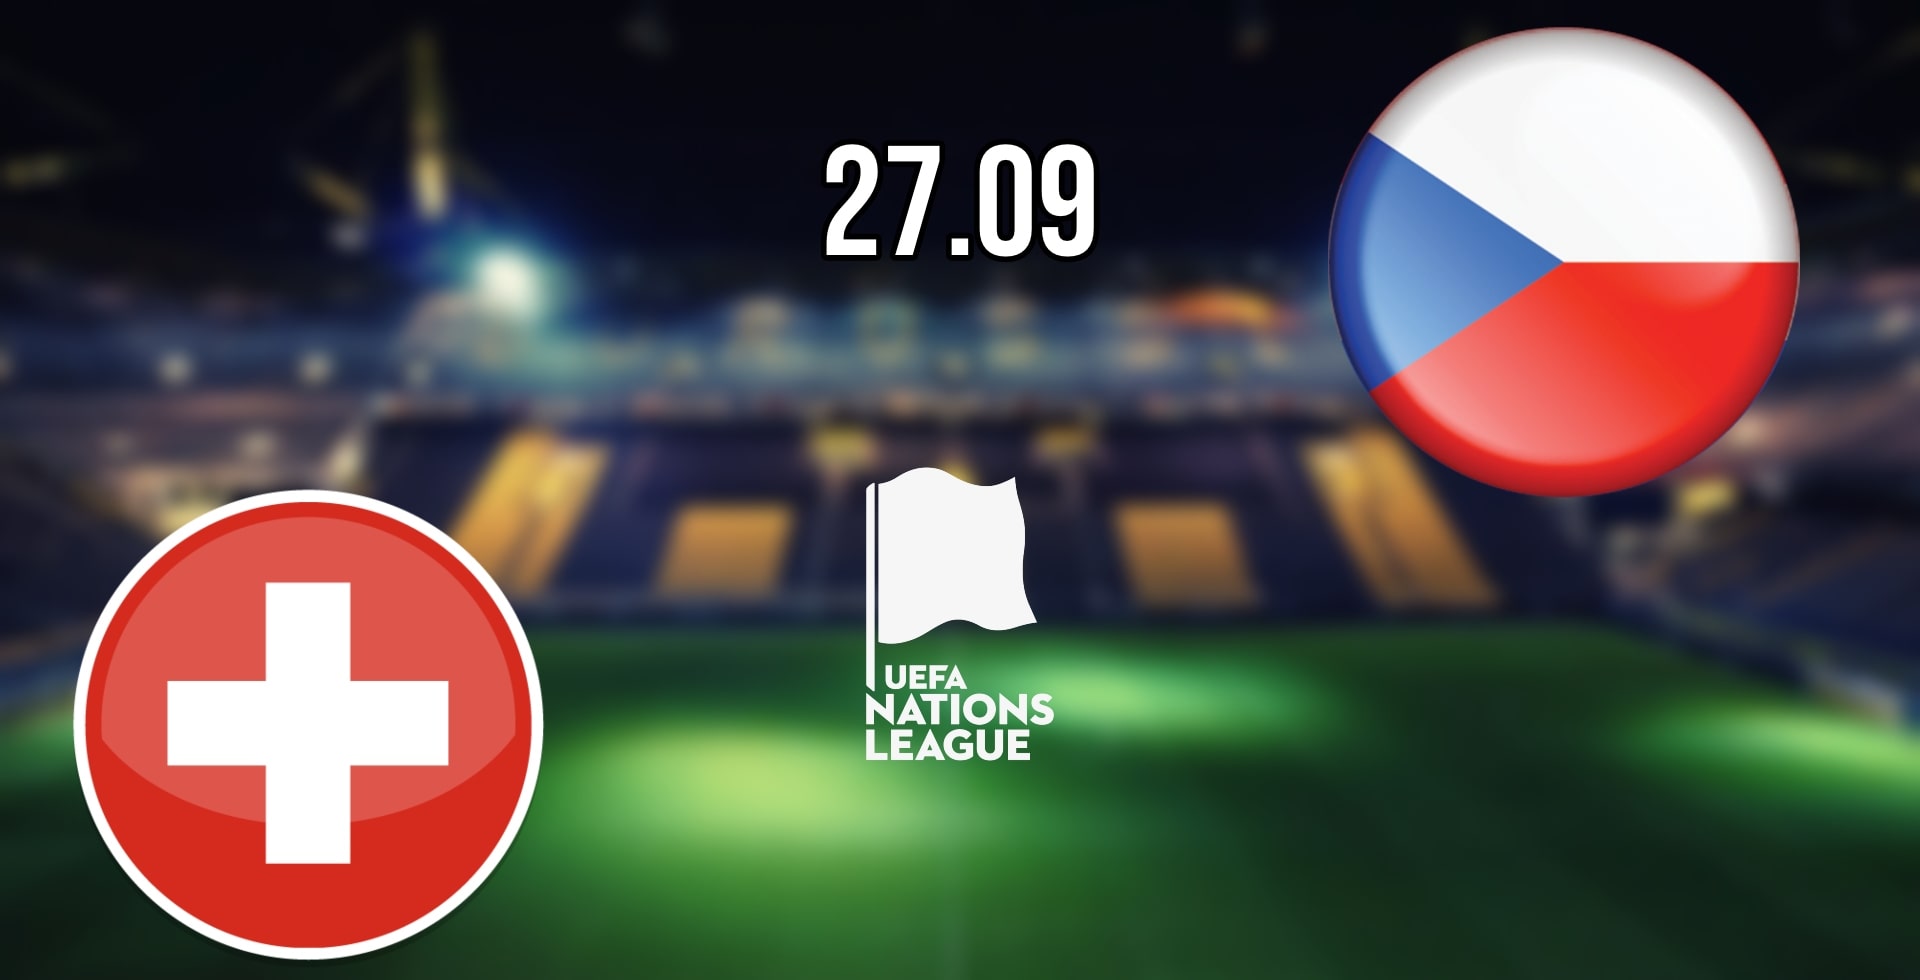 Switzerland vs Czechia Prediction: Nations League Match on 27.09.2022